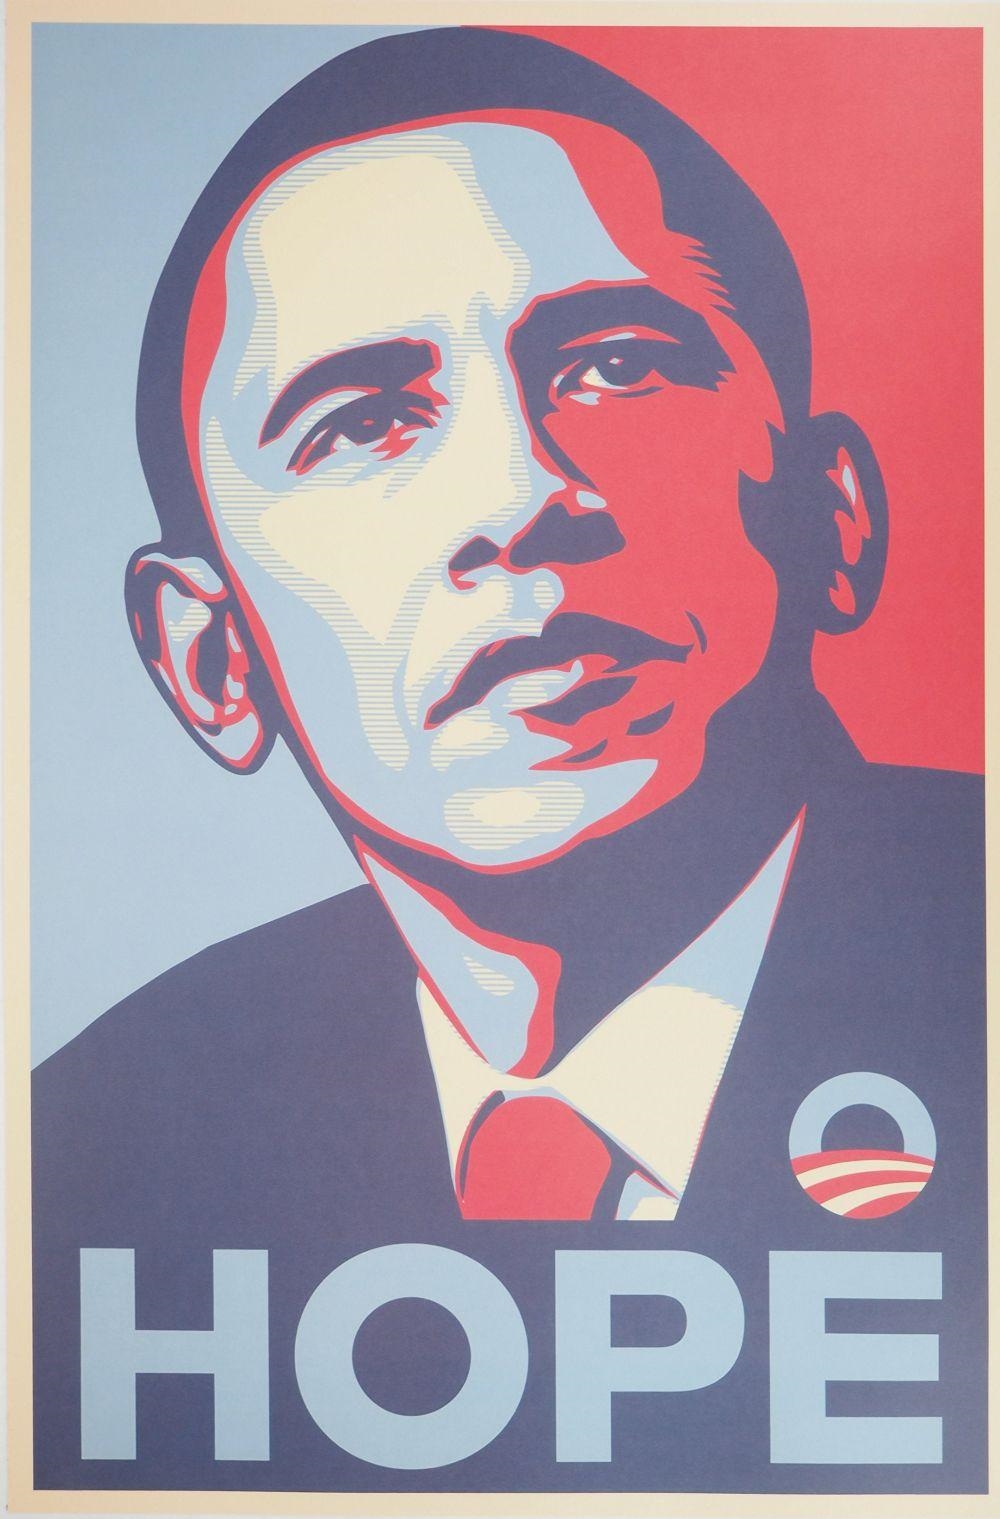 Obama, Hope - Shepard Fairey